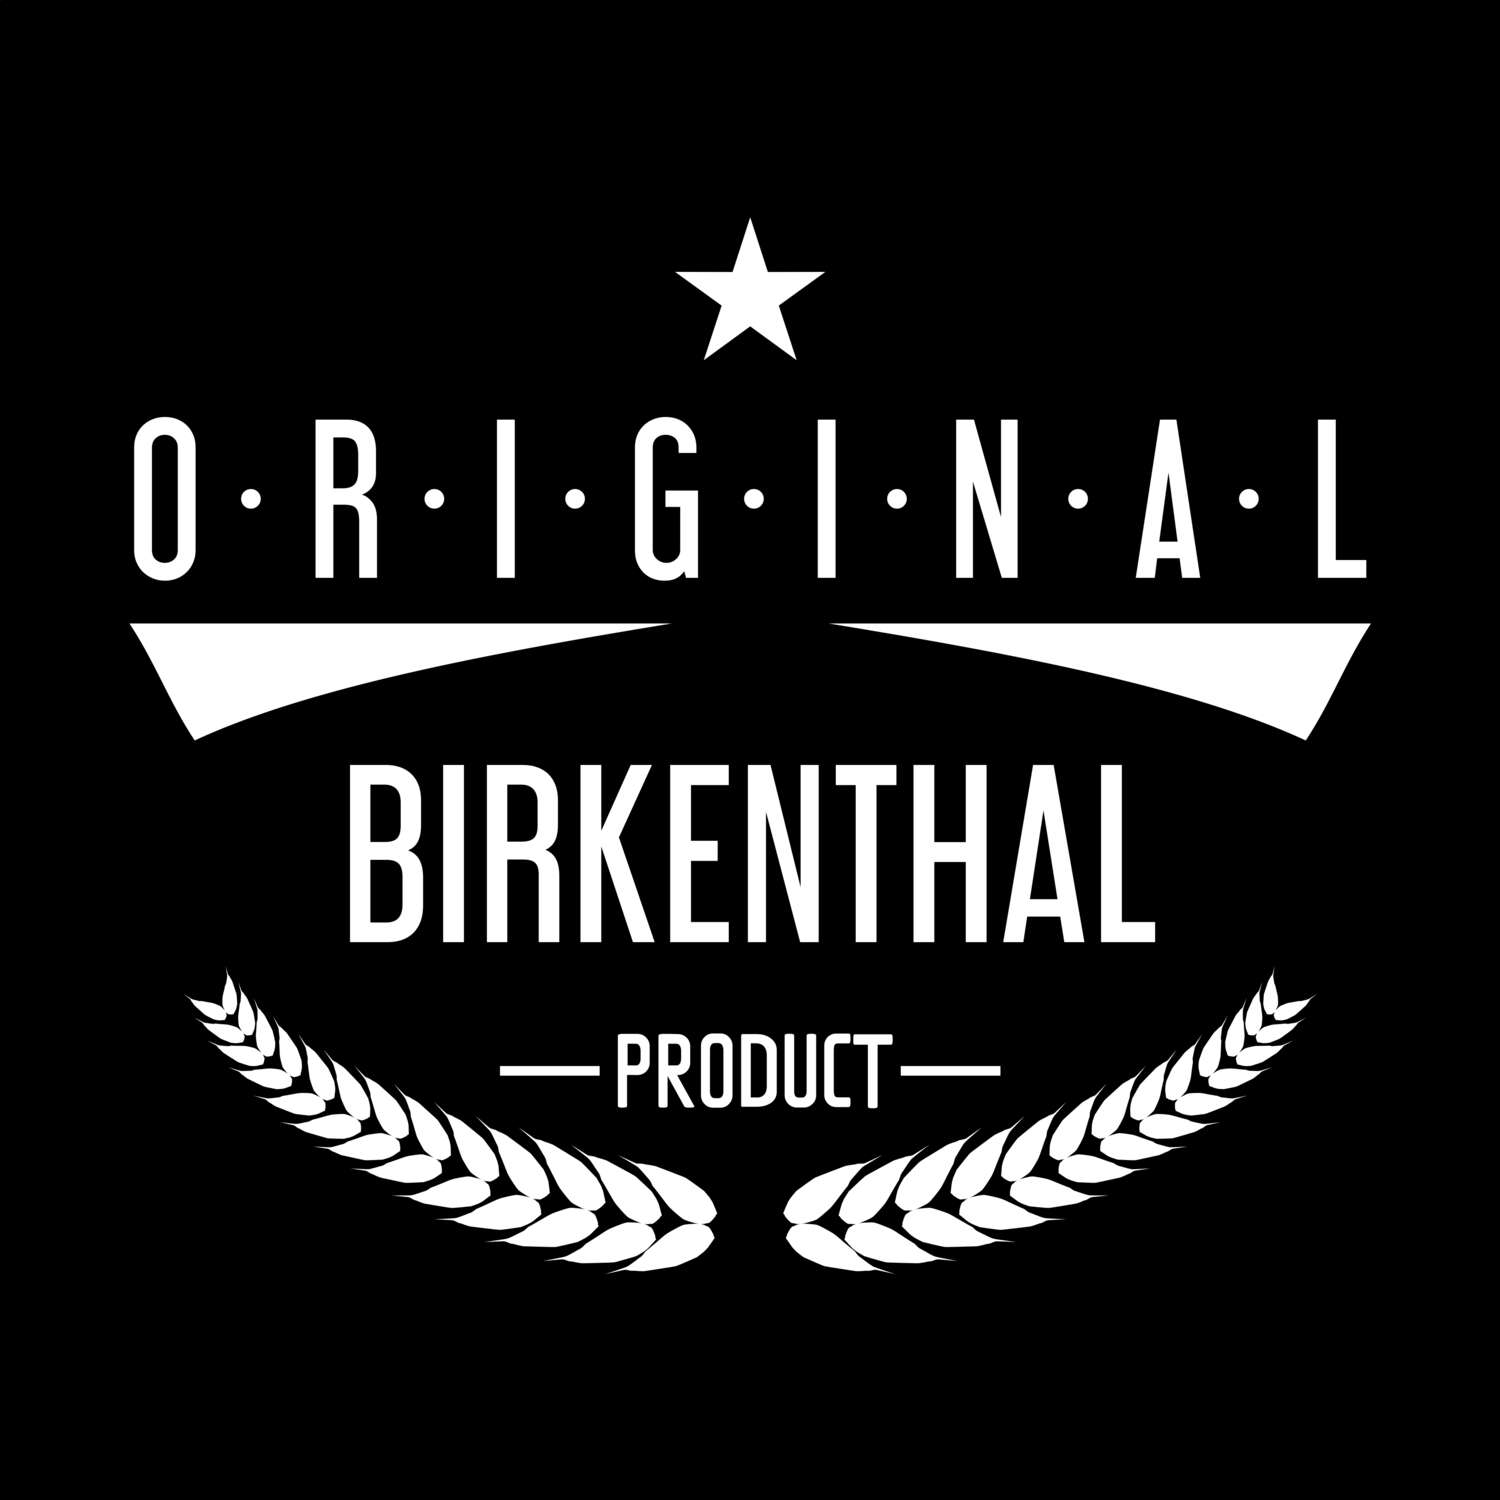 Birkenthal T-Shirt »Original Product«